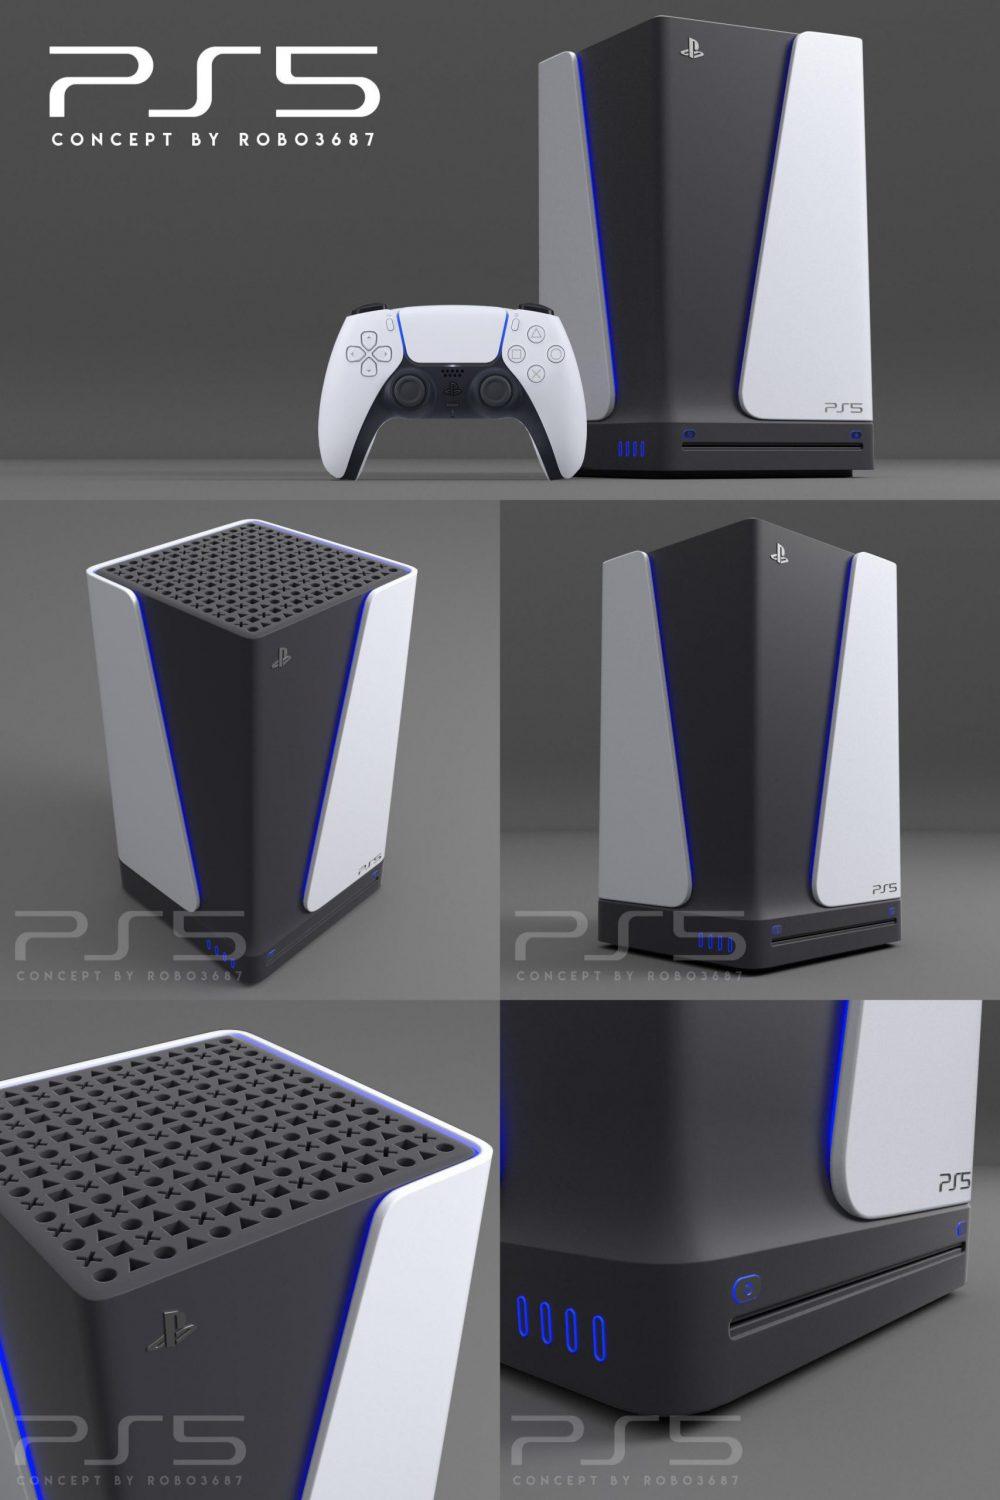 Diseño conceptual de la PS5